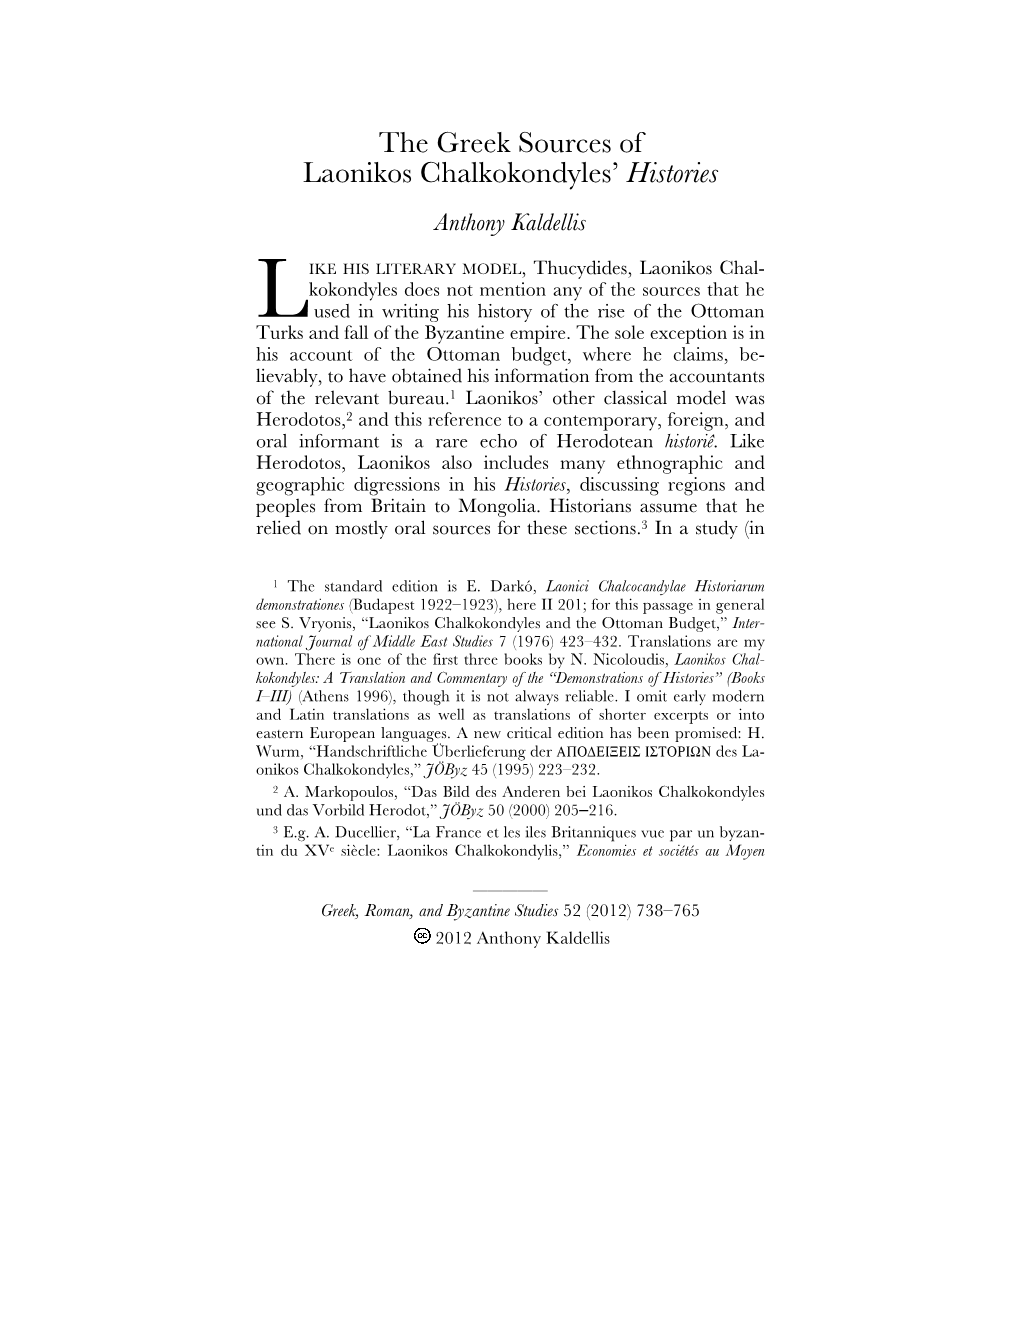 The Greek Sources of Laonikos Chalkokondyles' Histories